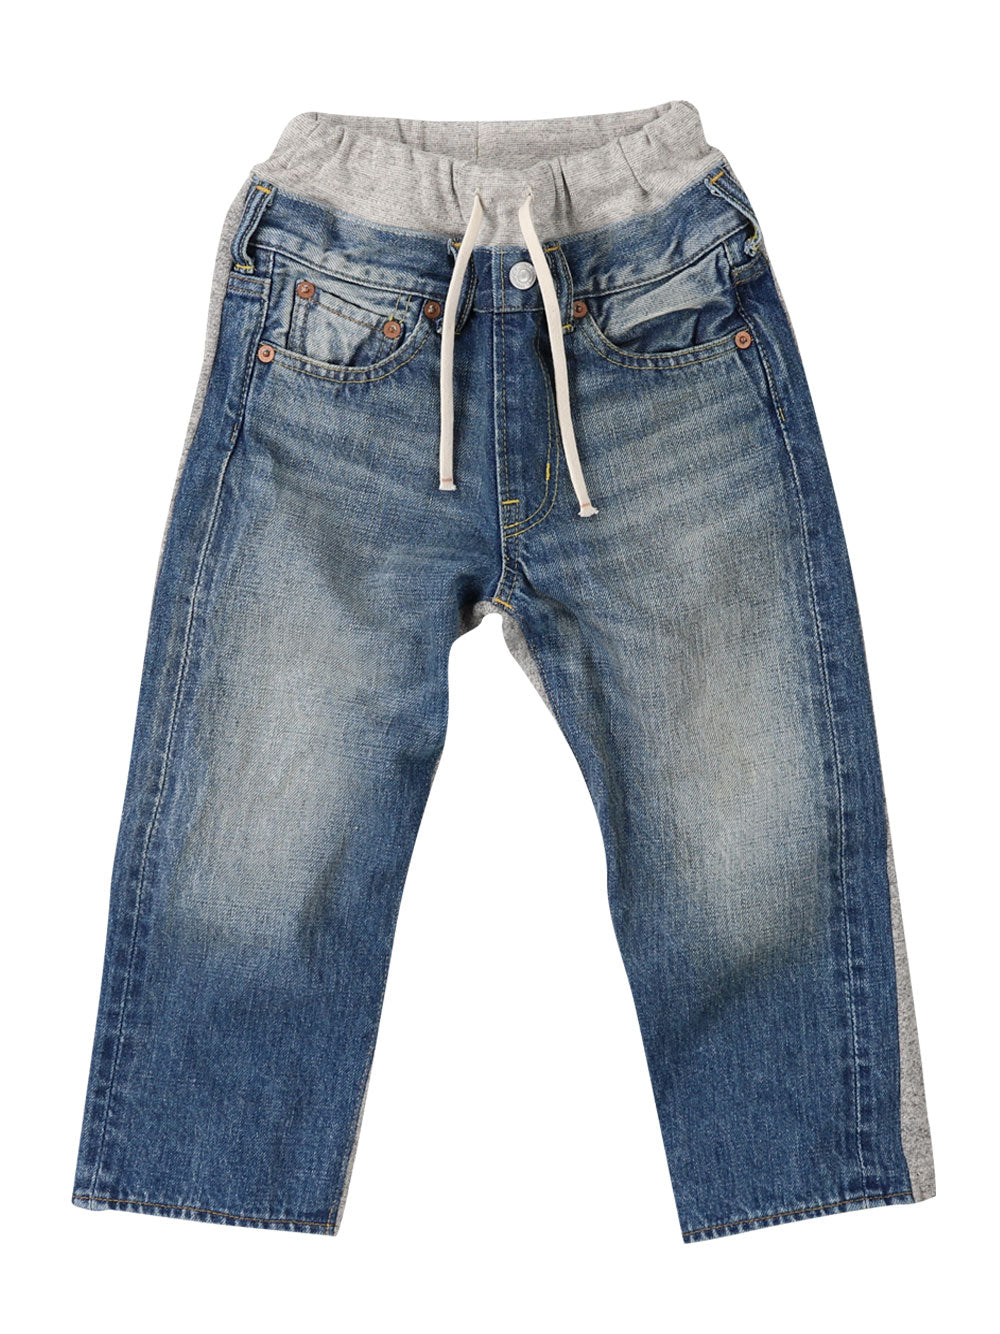 PREORDER: Grey Back Jeans